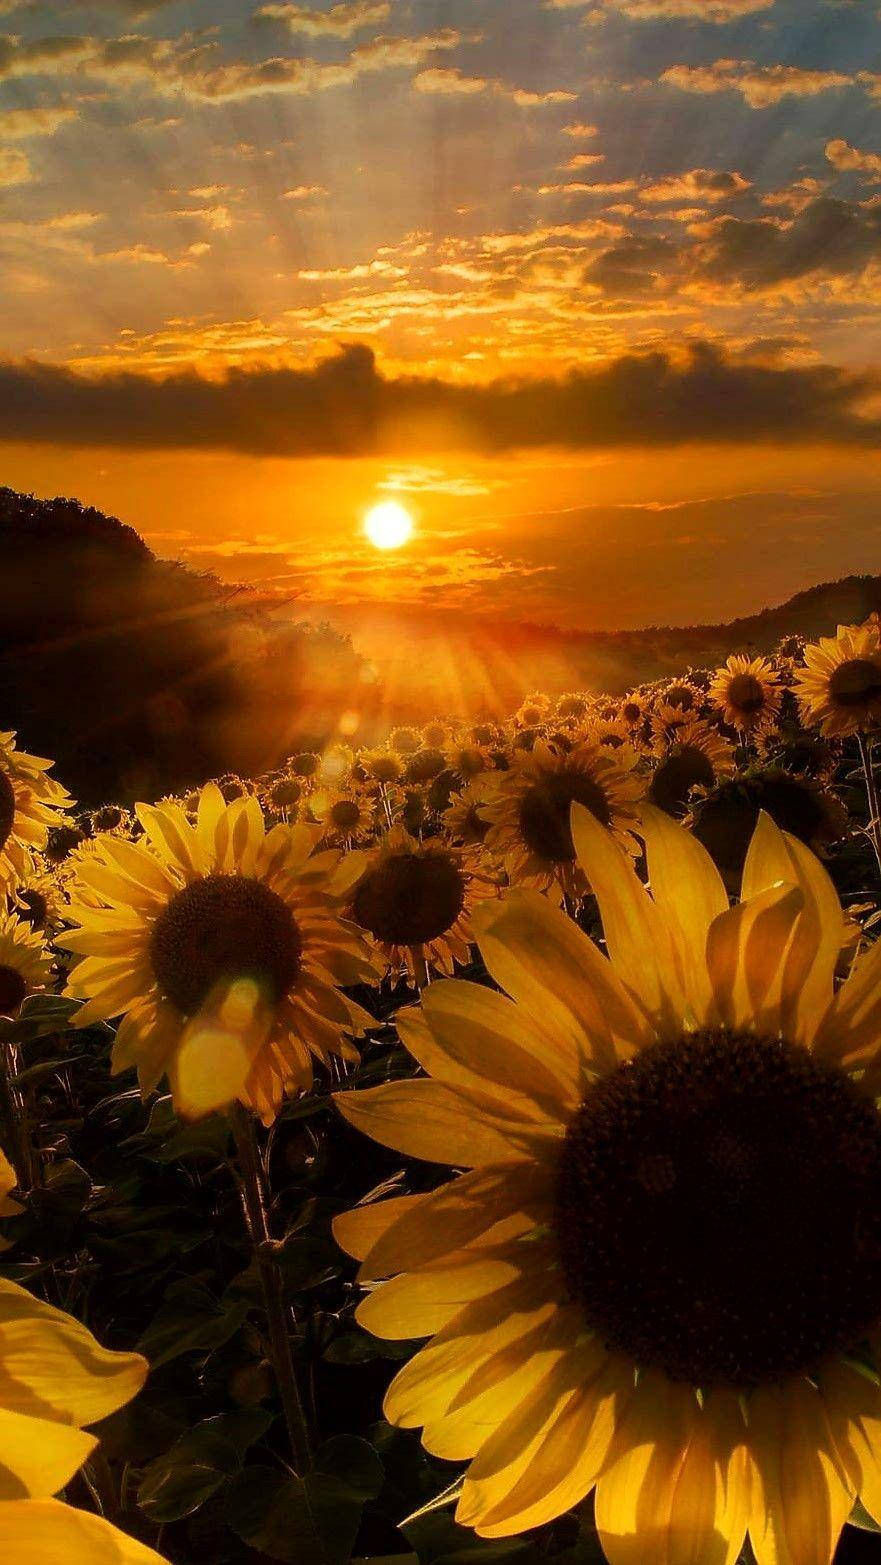 Gamber Sunflowers Under Sunset Background